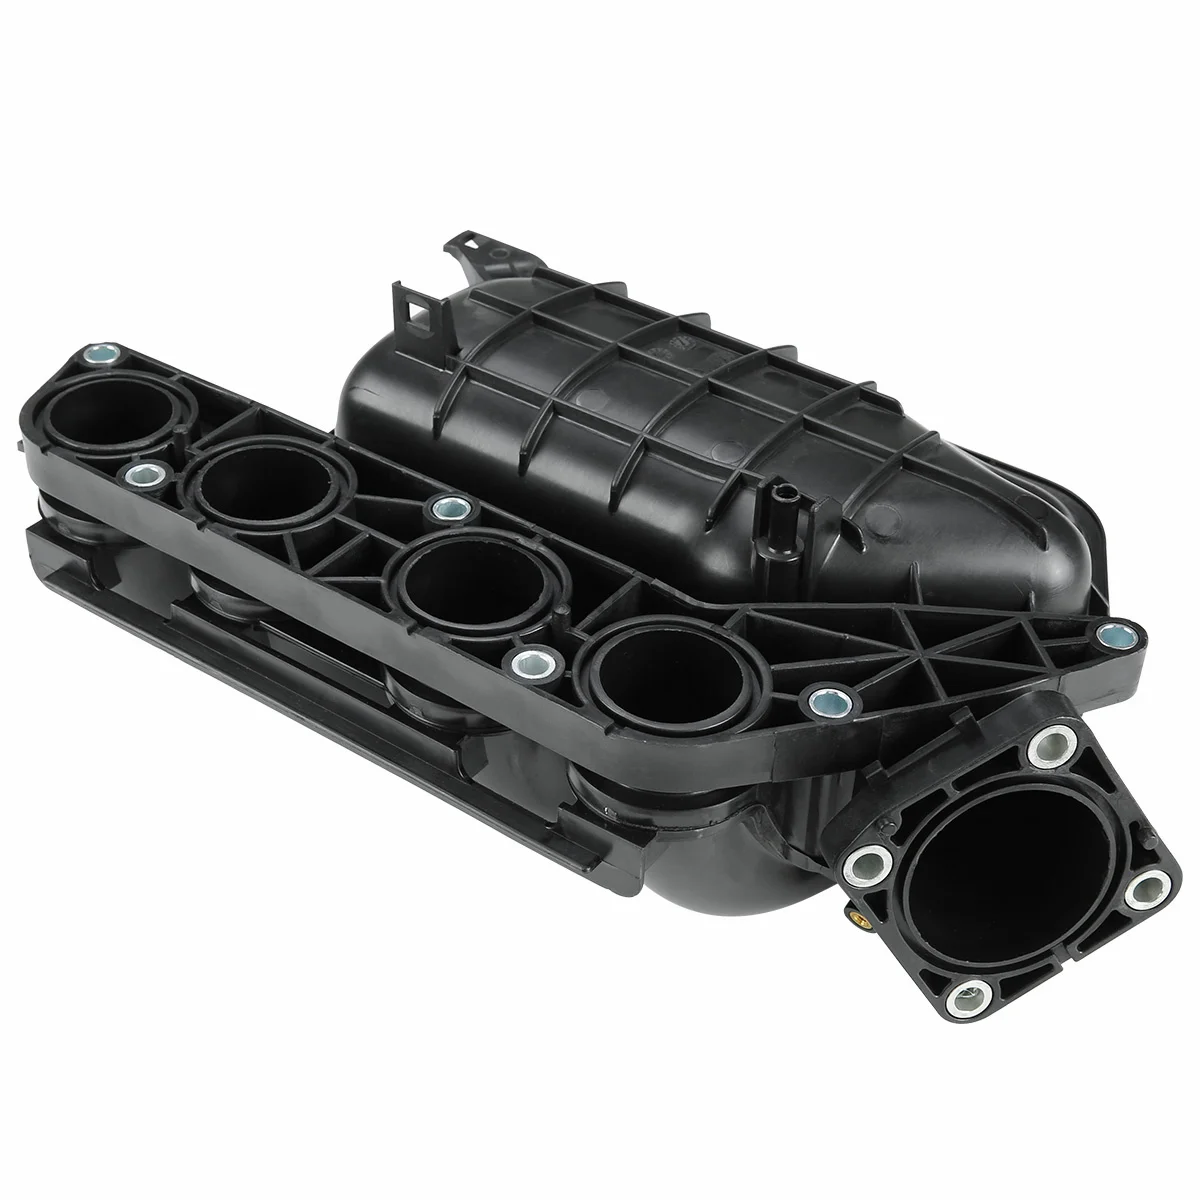 

CN US CA Engine Intake Manifold for Honda Accord 08-12 CR-V 12-14 Civic 2.4L 17100R40A00 17100-R40-A00